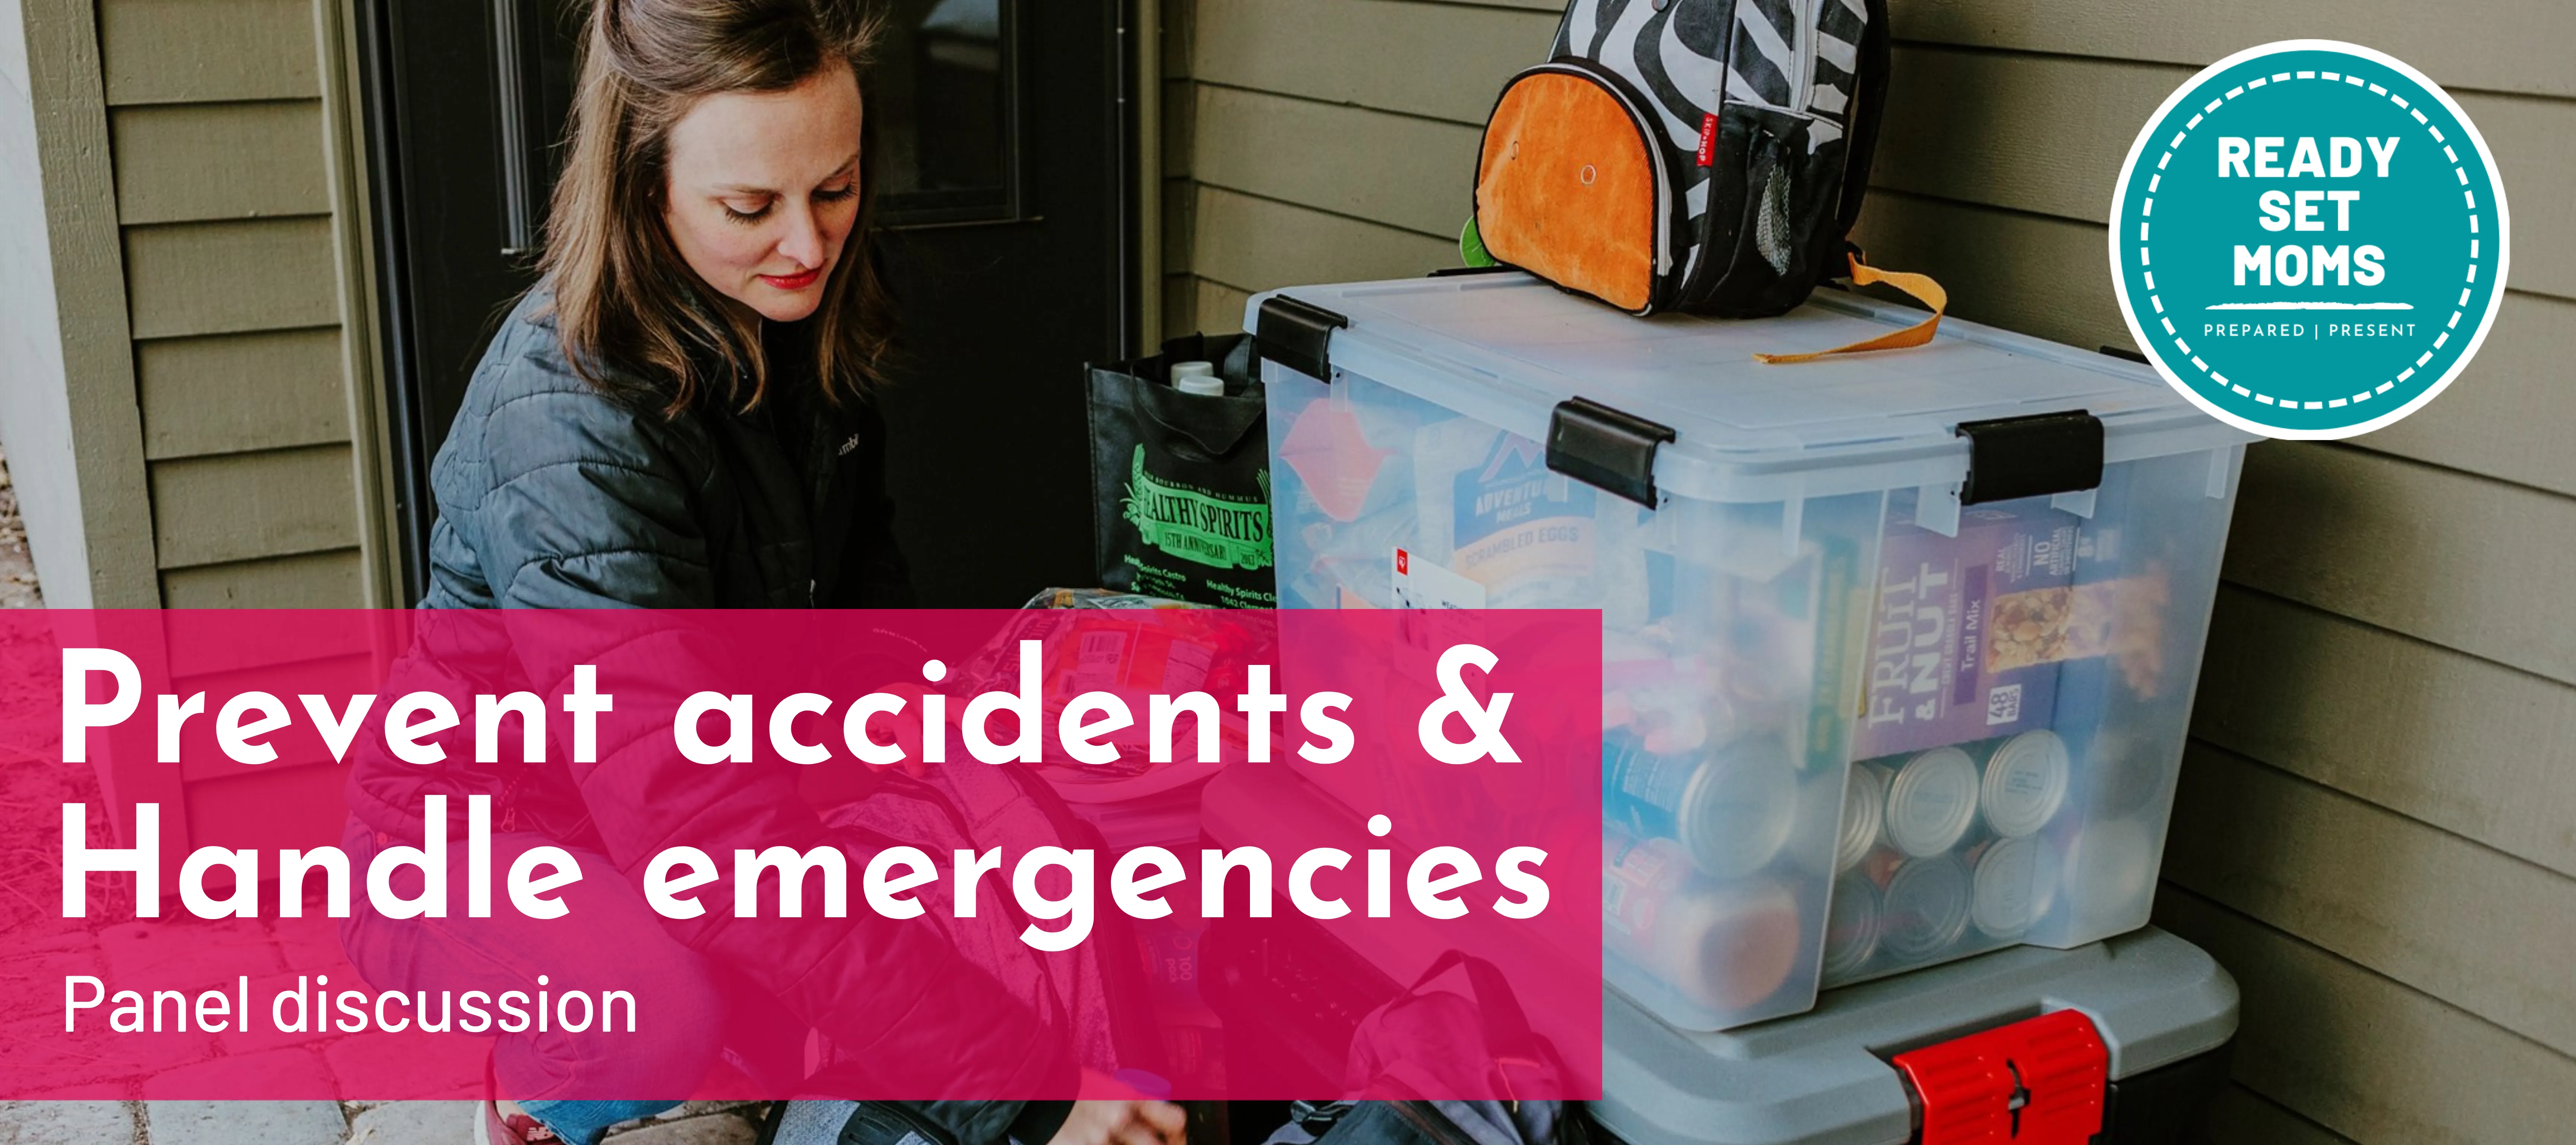 Emergency kits